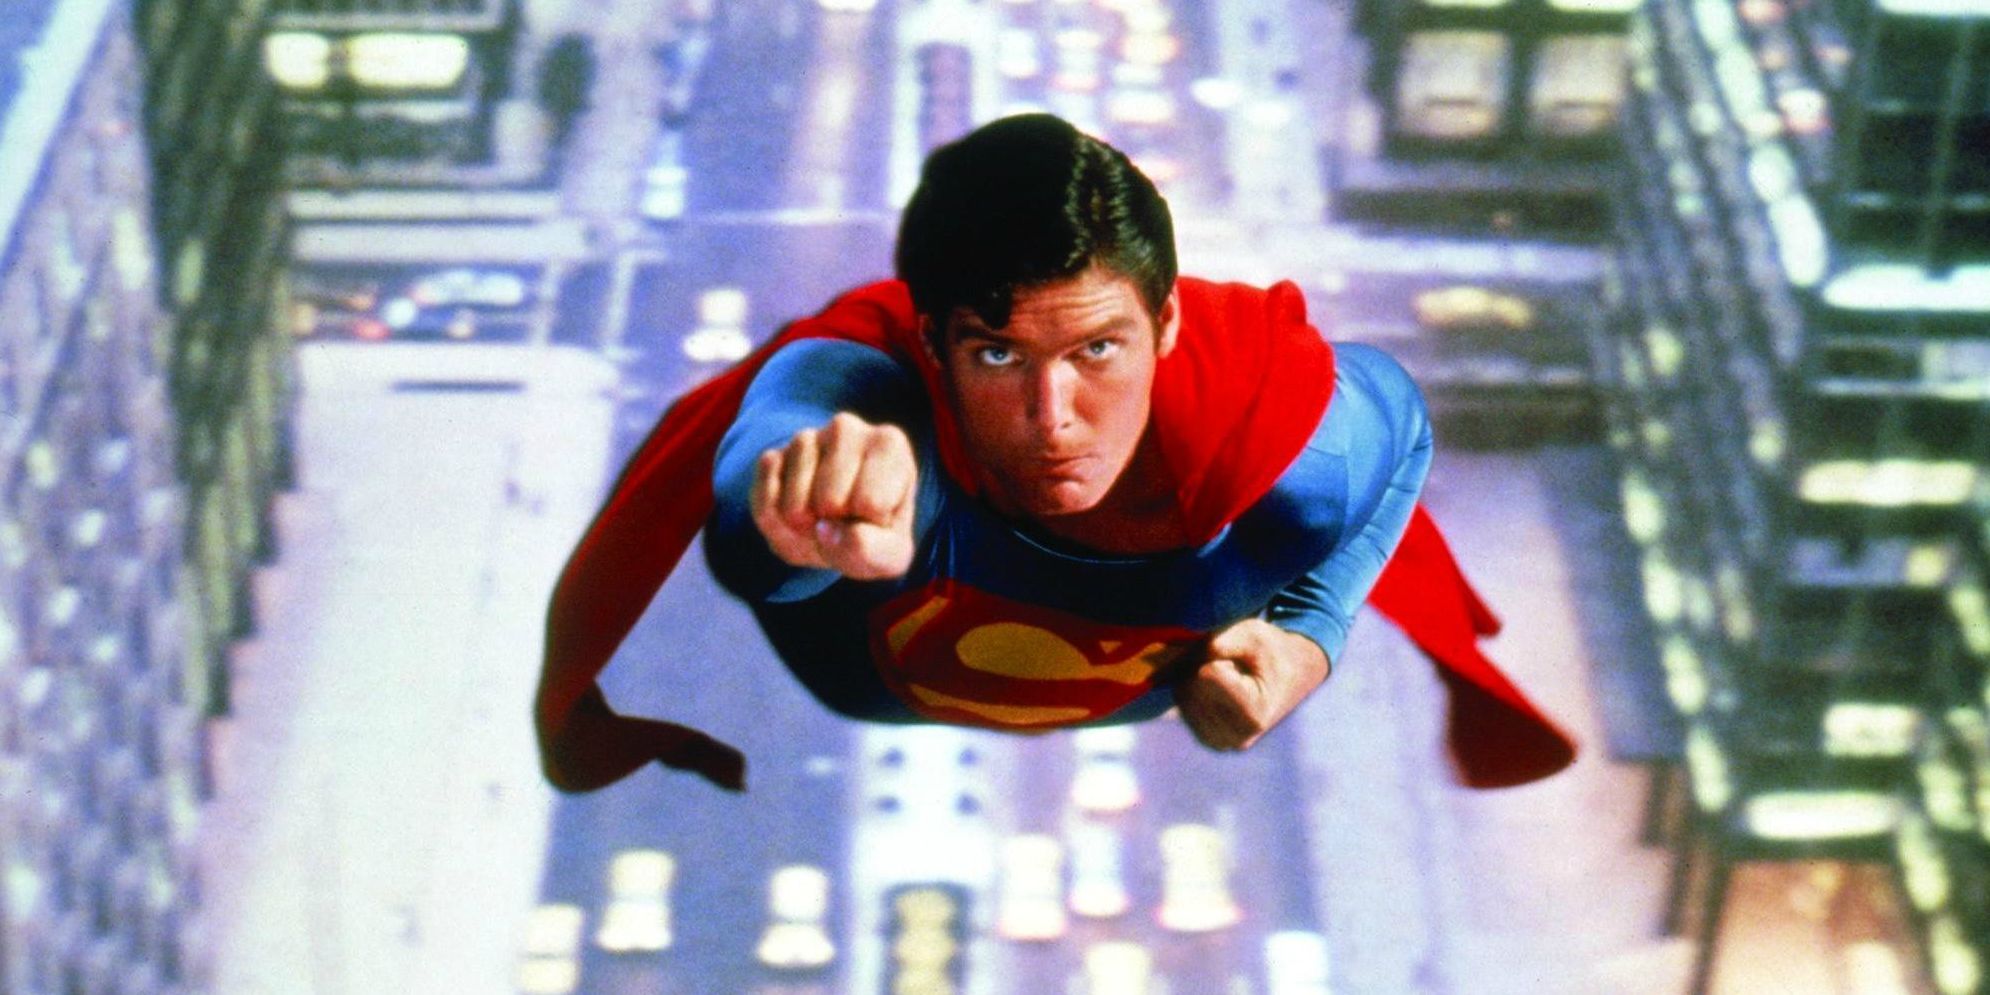 How Richard Donners Superman Shaped Modern Superhero Movies